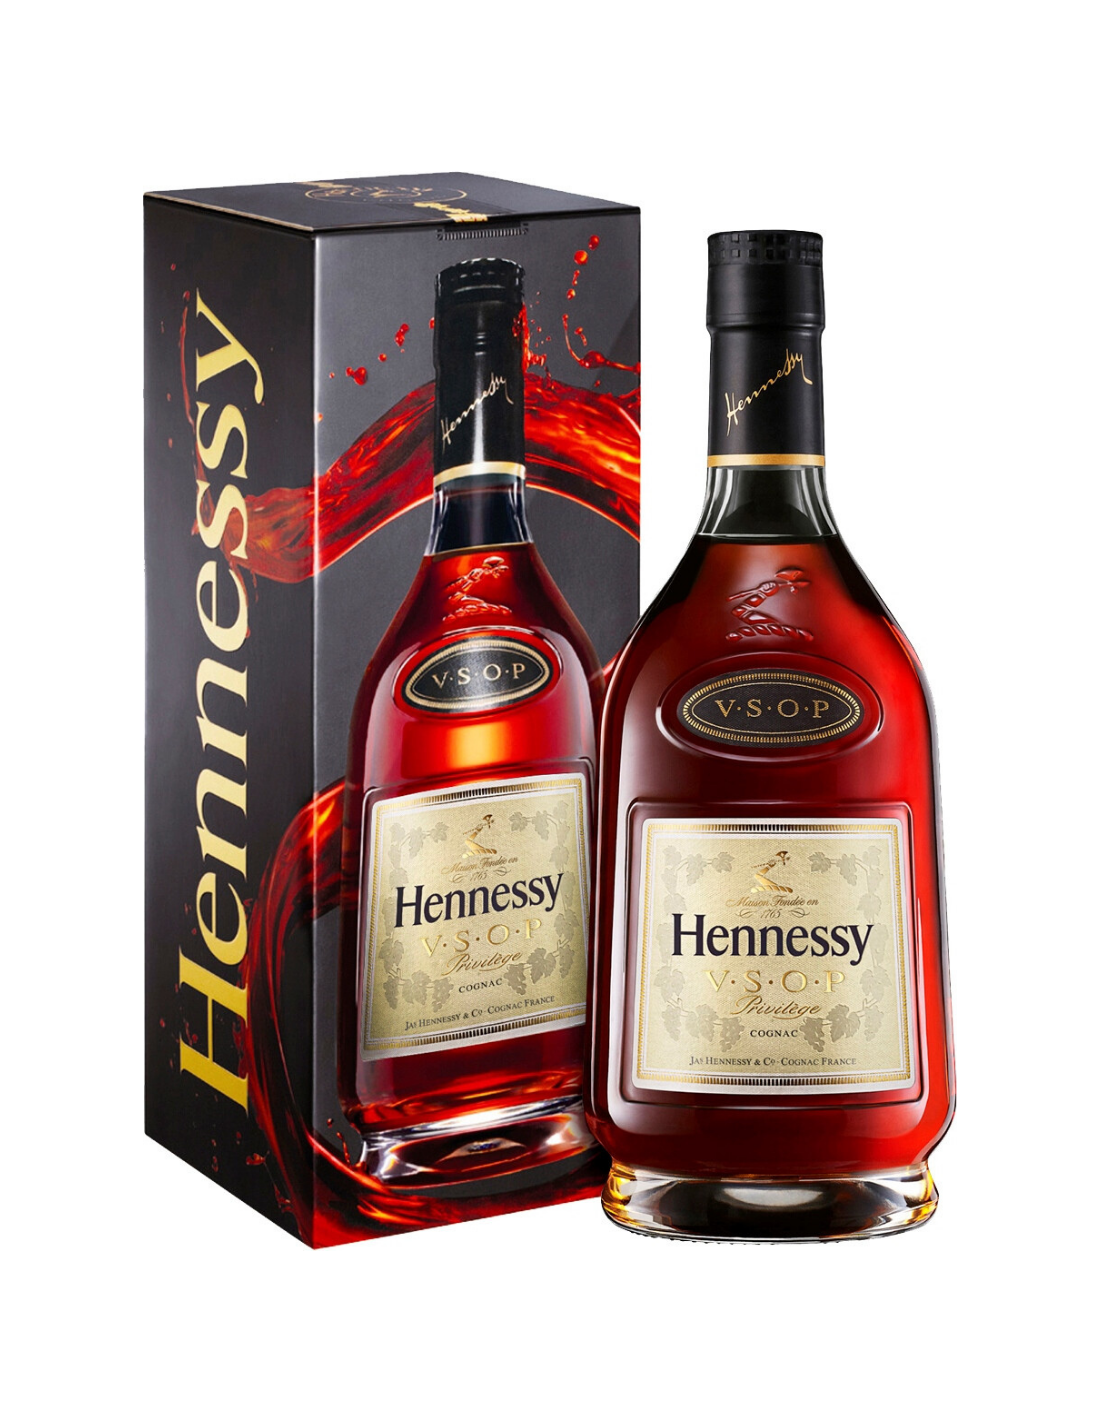 Coniac Hennessy VSOP, 40% alc., 0.7L, Franta alcooldiscount.ro